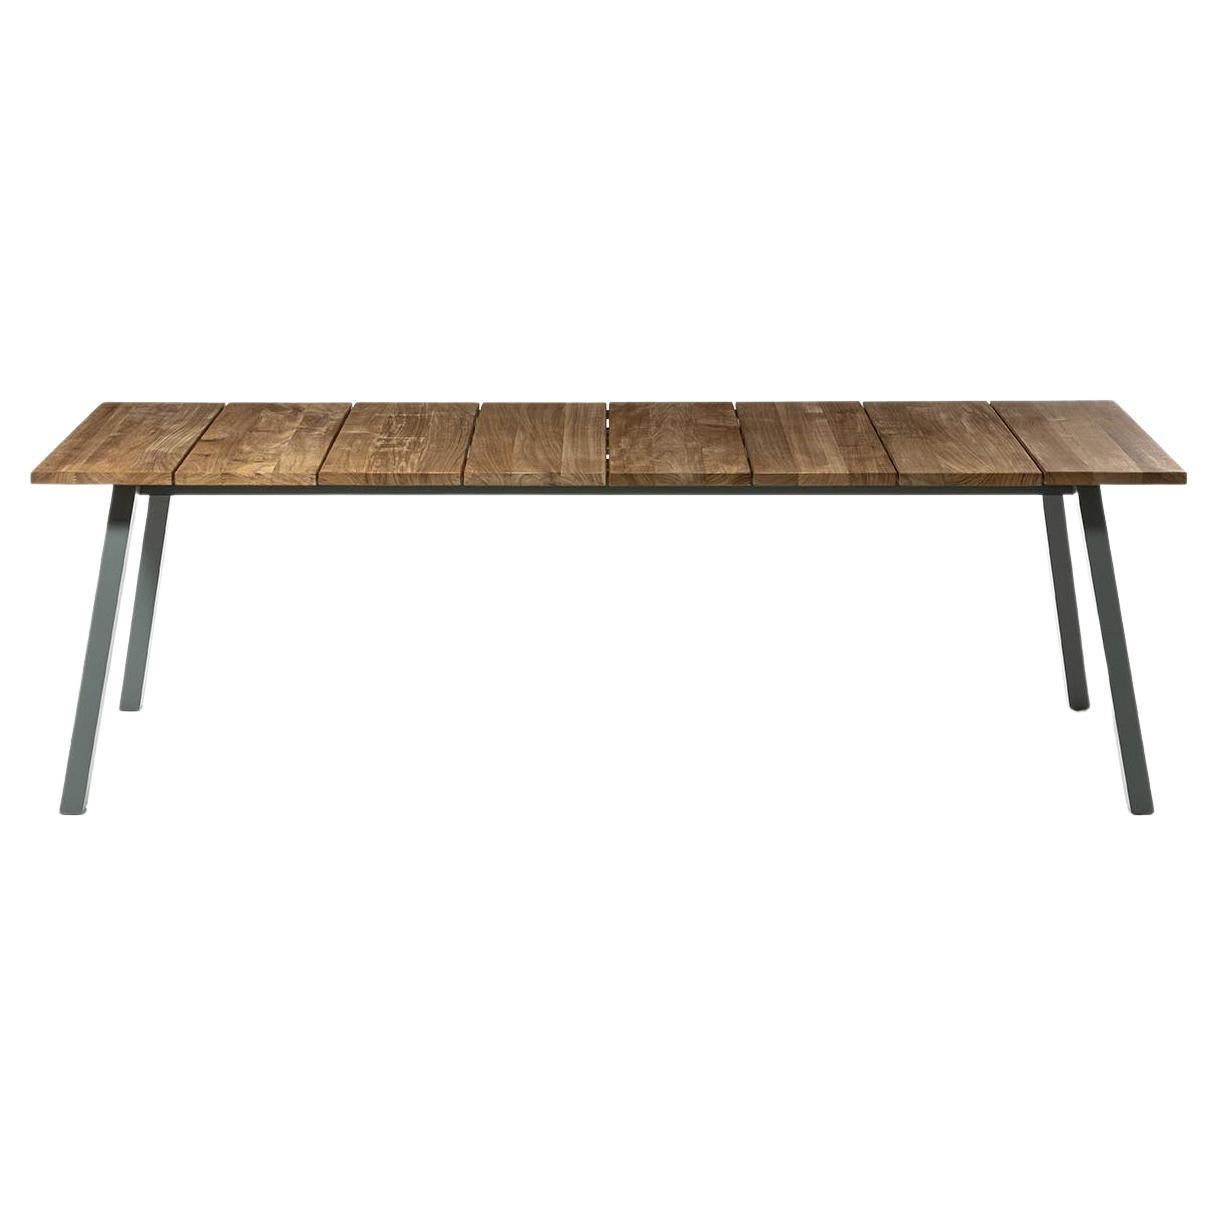 Gervasoni Large Inout Table in Natural Teak Slats Top with Grey Aluminium Frame